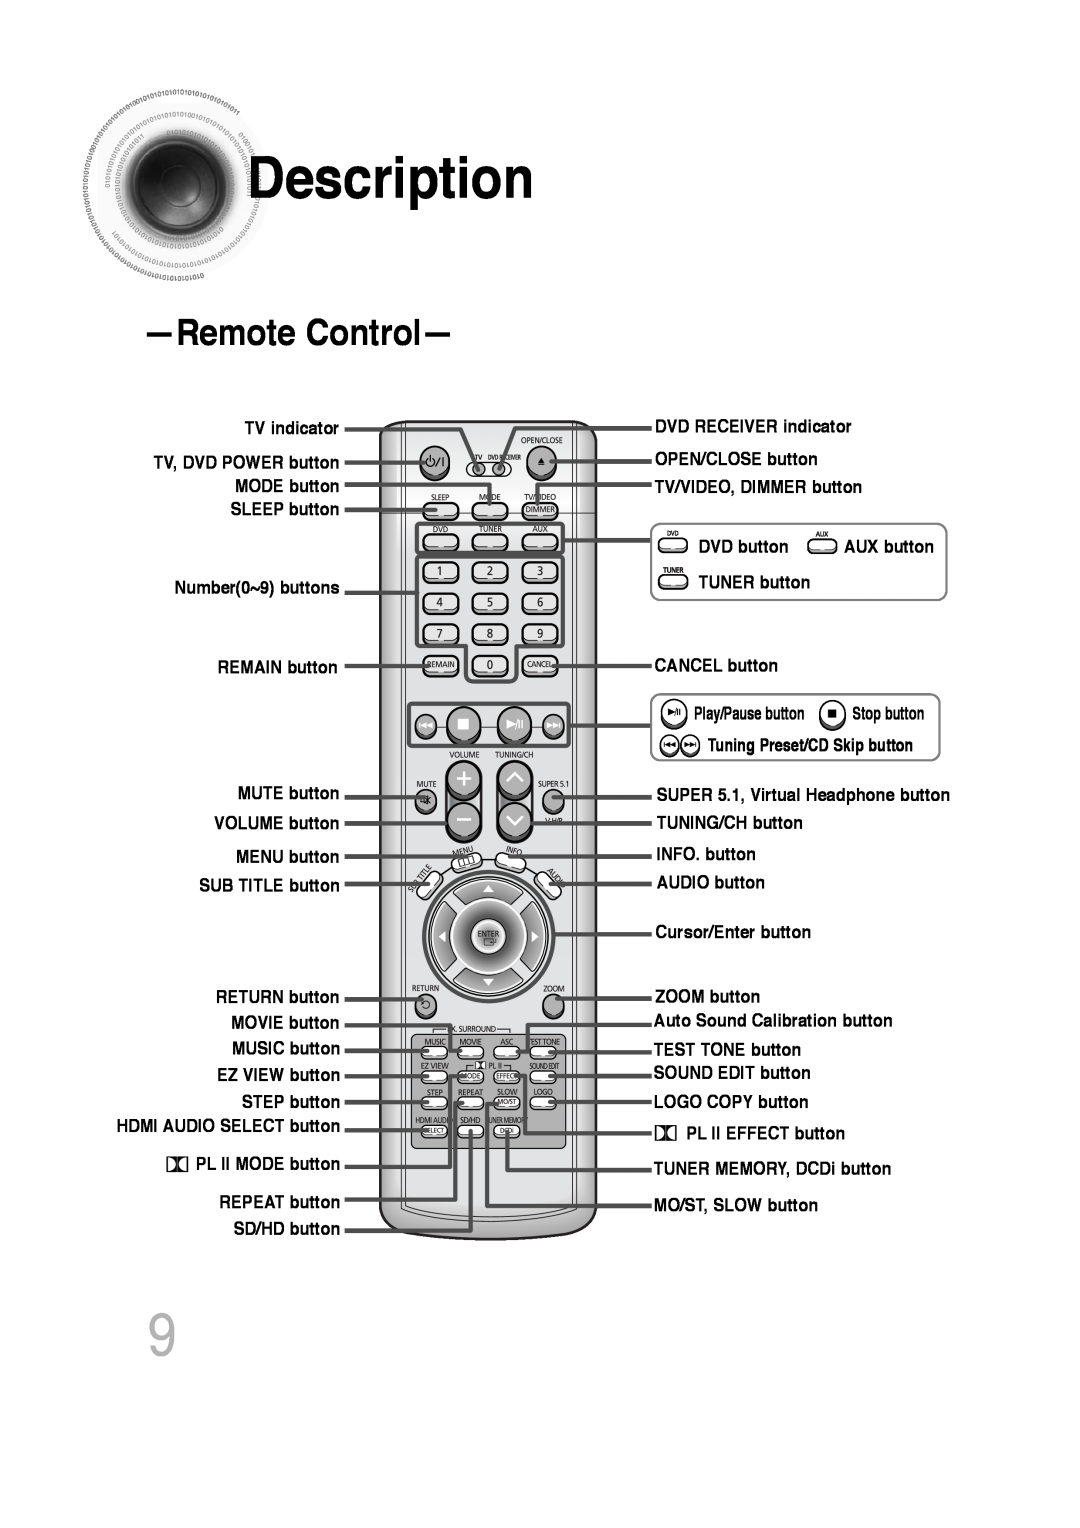 Samsung 20060814151350437, SDSM-EX RemoteControl, Description, TV indicator TV, DVD POWER button MODE button, DVD button 